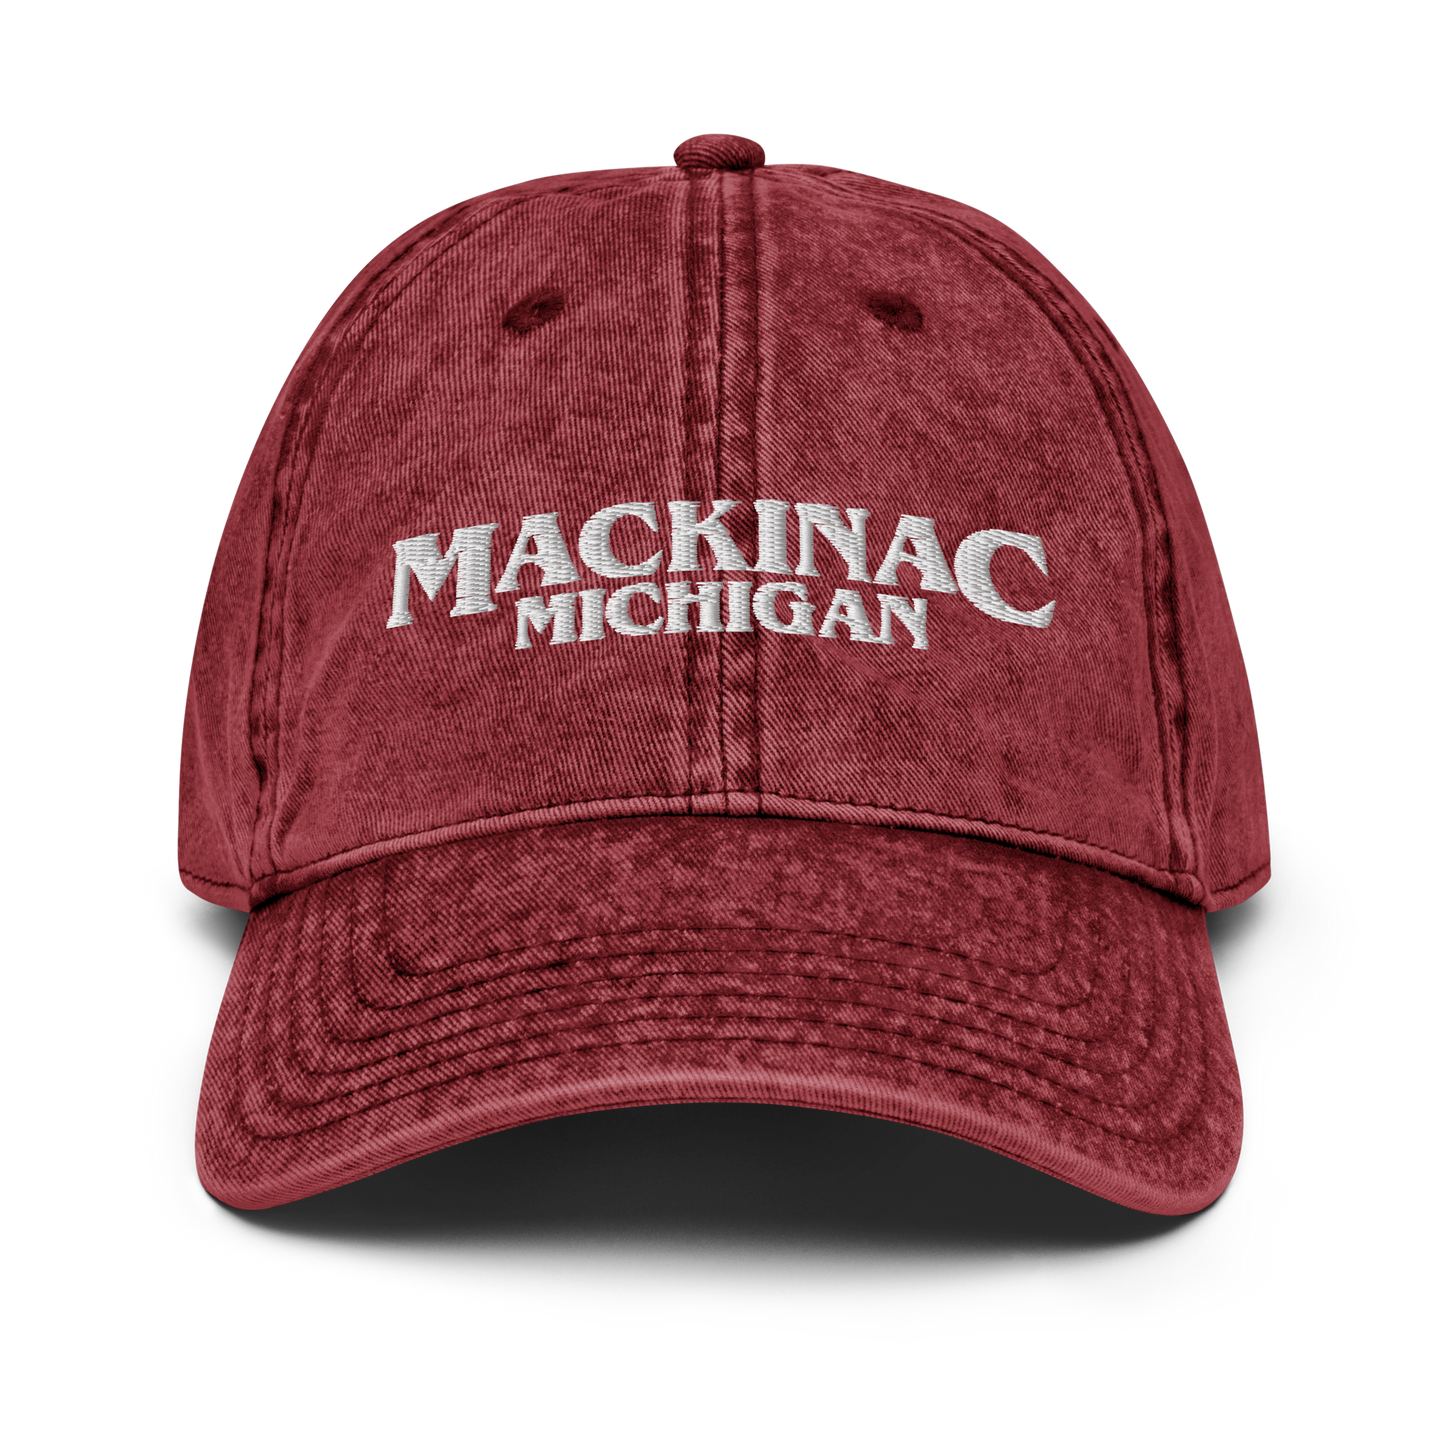 'Mackinac Michigan' Vintage Baseball Cap (1980s Drama Parody)